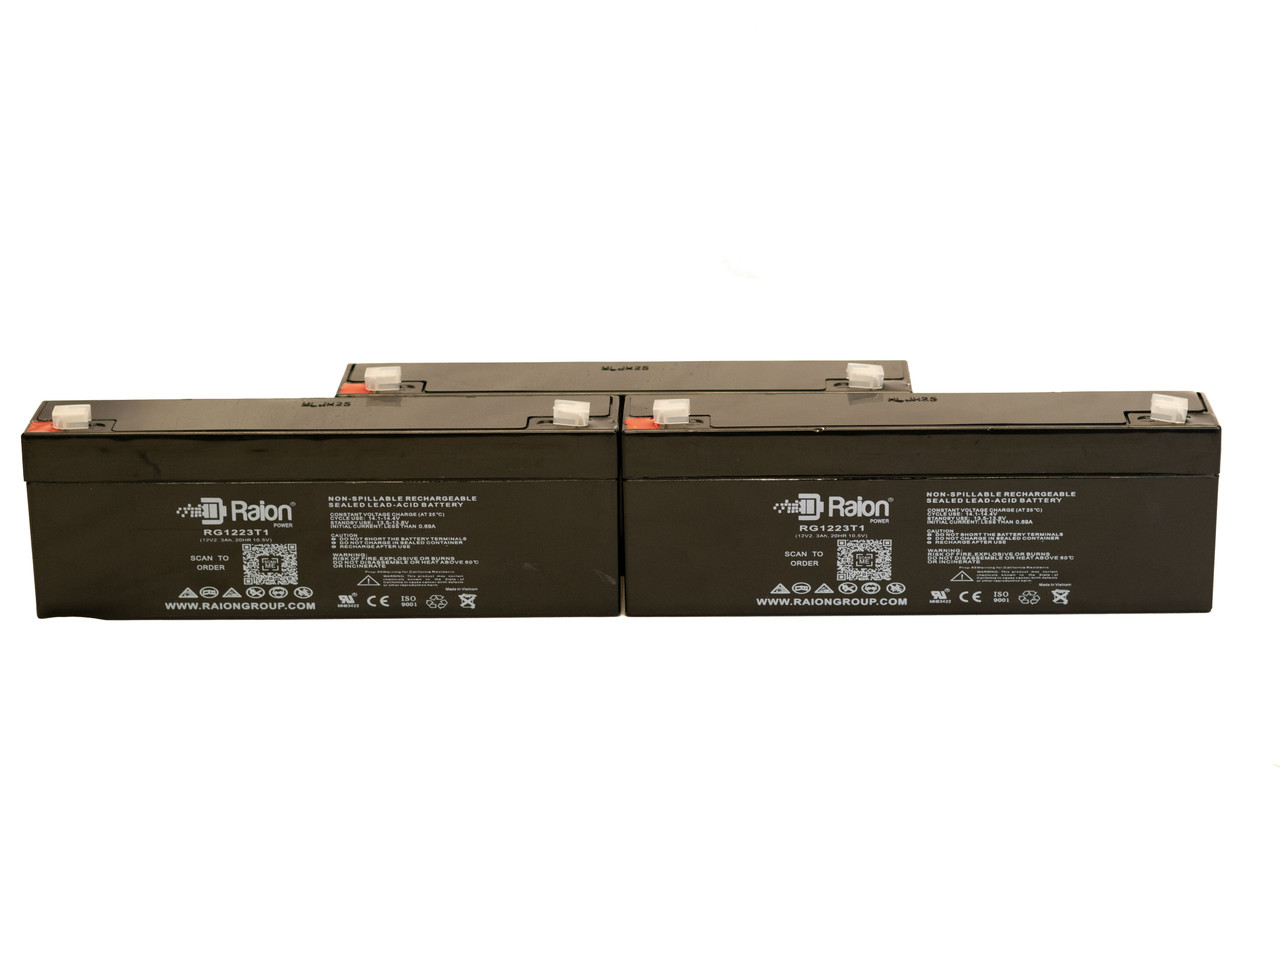 Raion Power 12V 2.3Ah RG1223T1 Replacement Medical Battery for Guardian, Douglas DG1 2-1.8 - 3 Pack